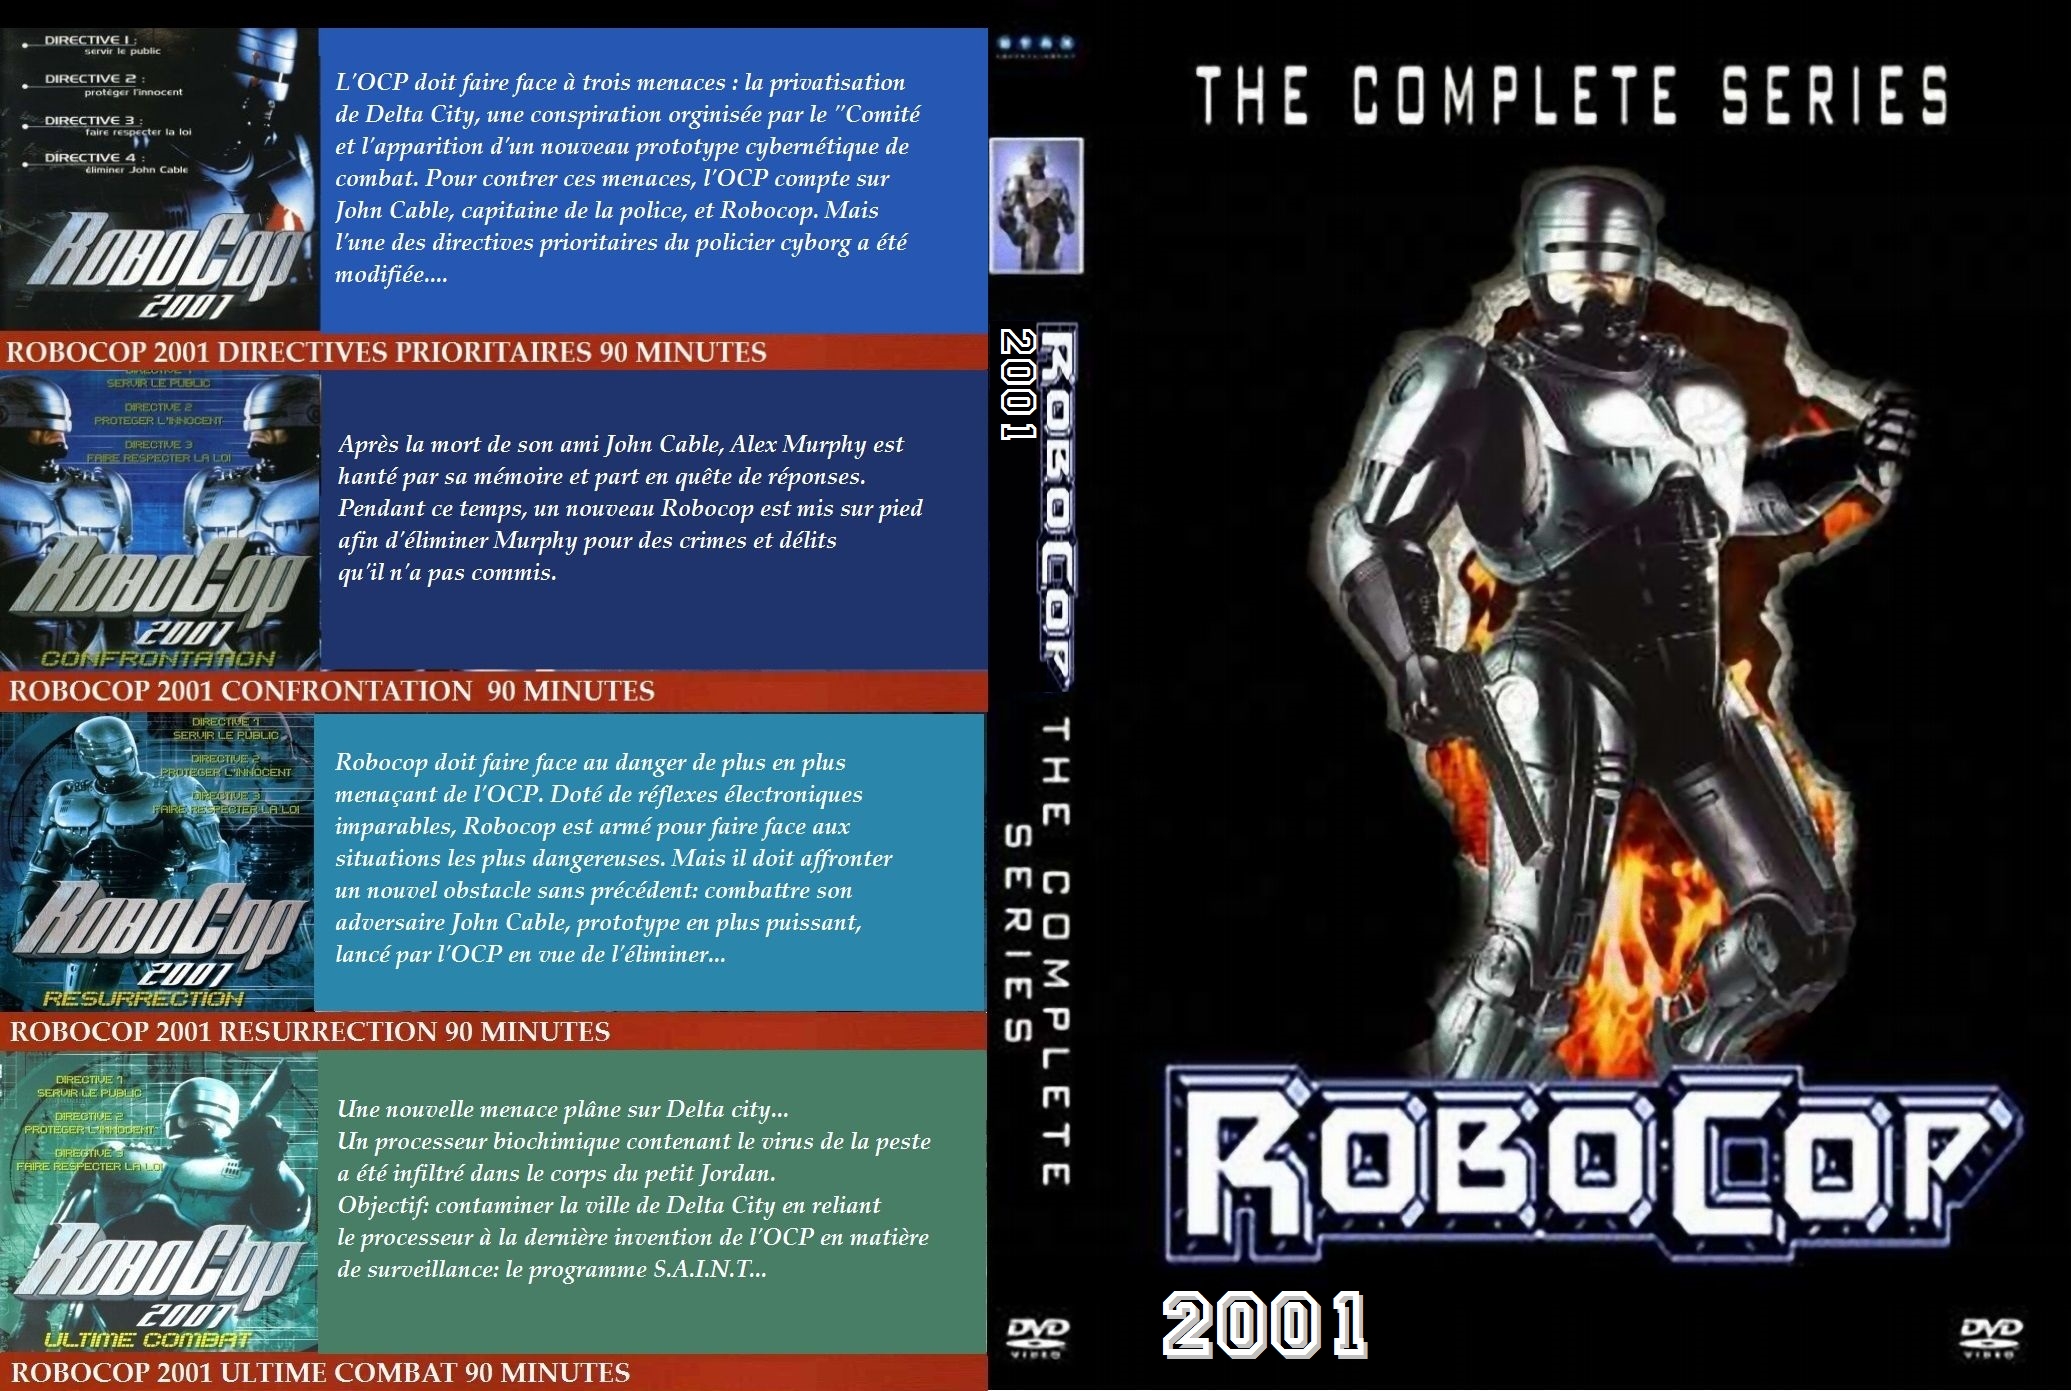 Jaquette DVD Robocop 2001 Complete 4 films